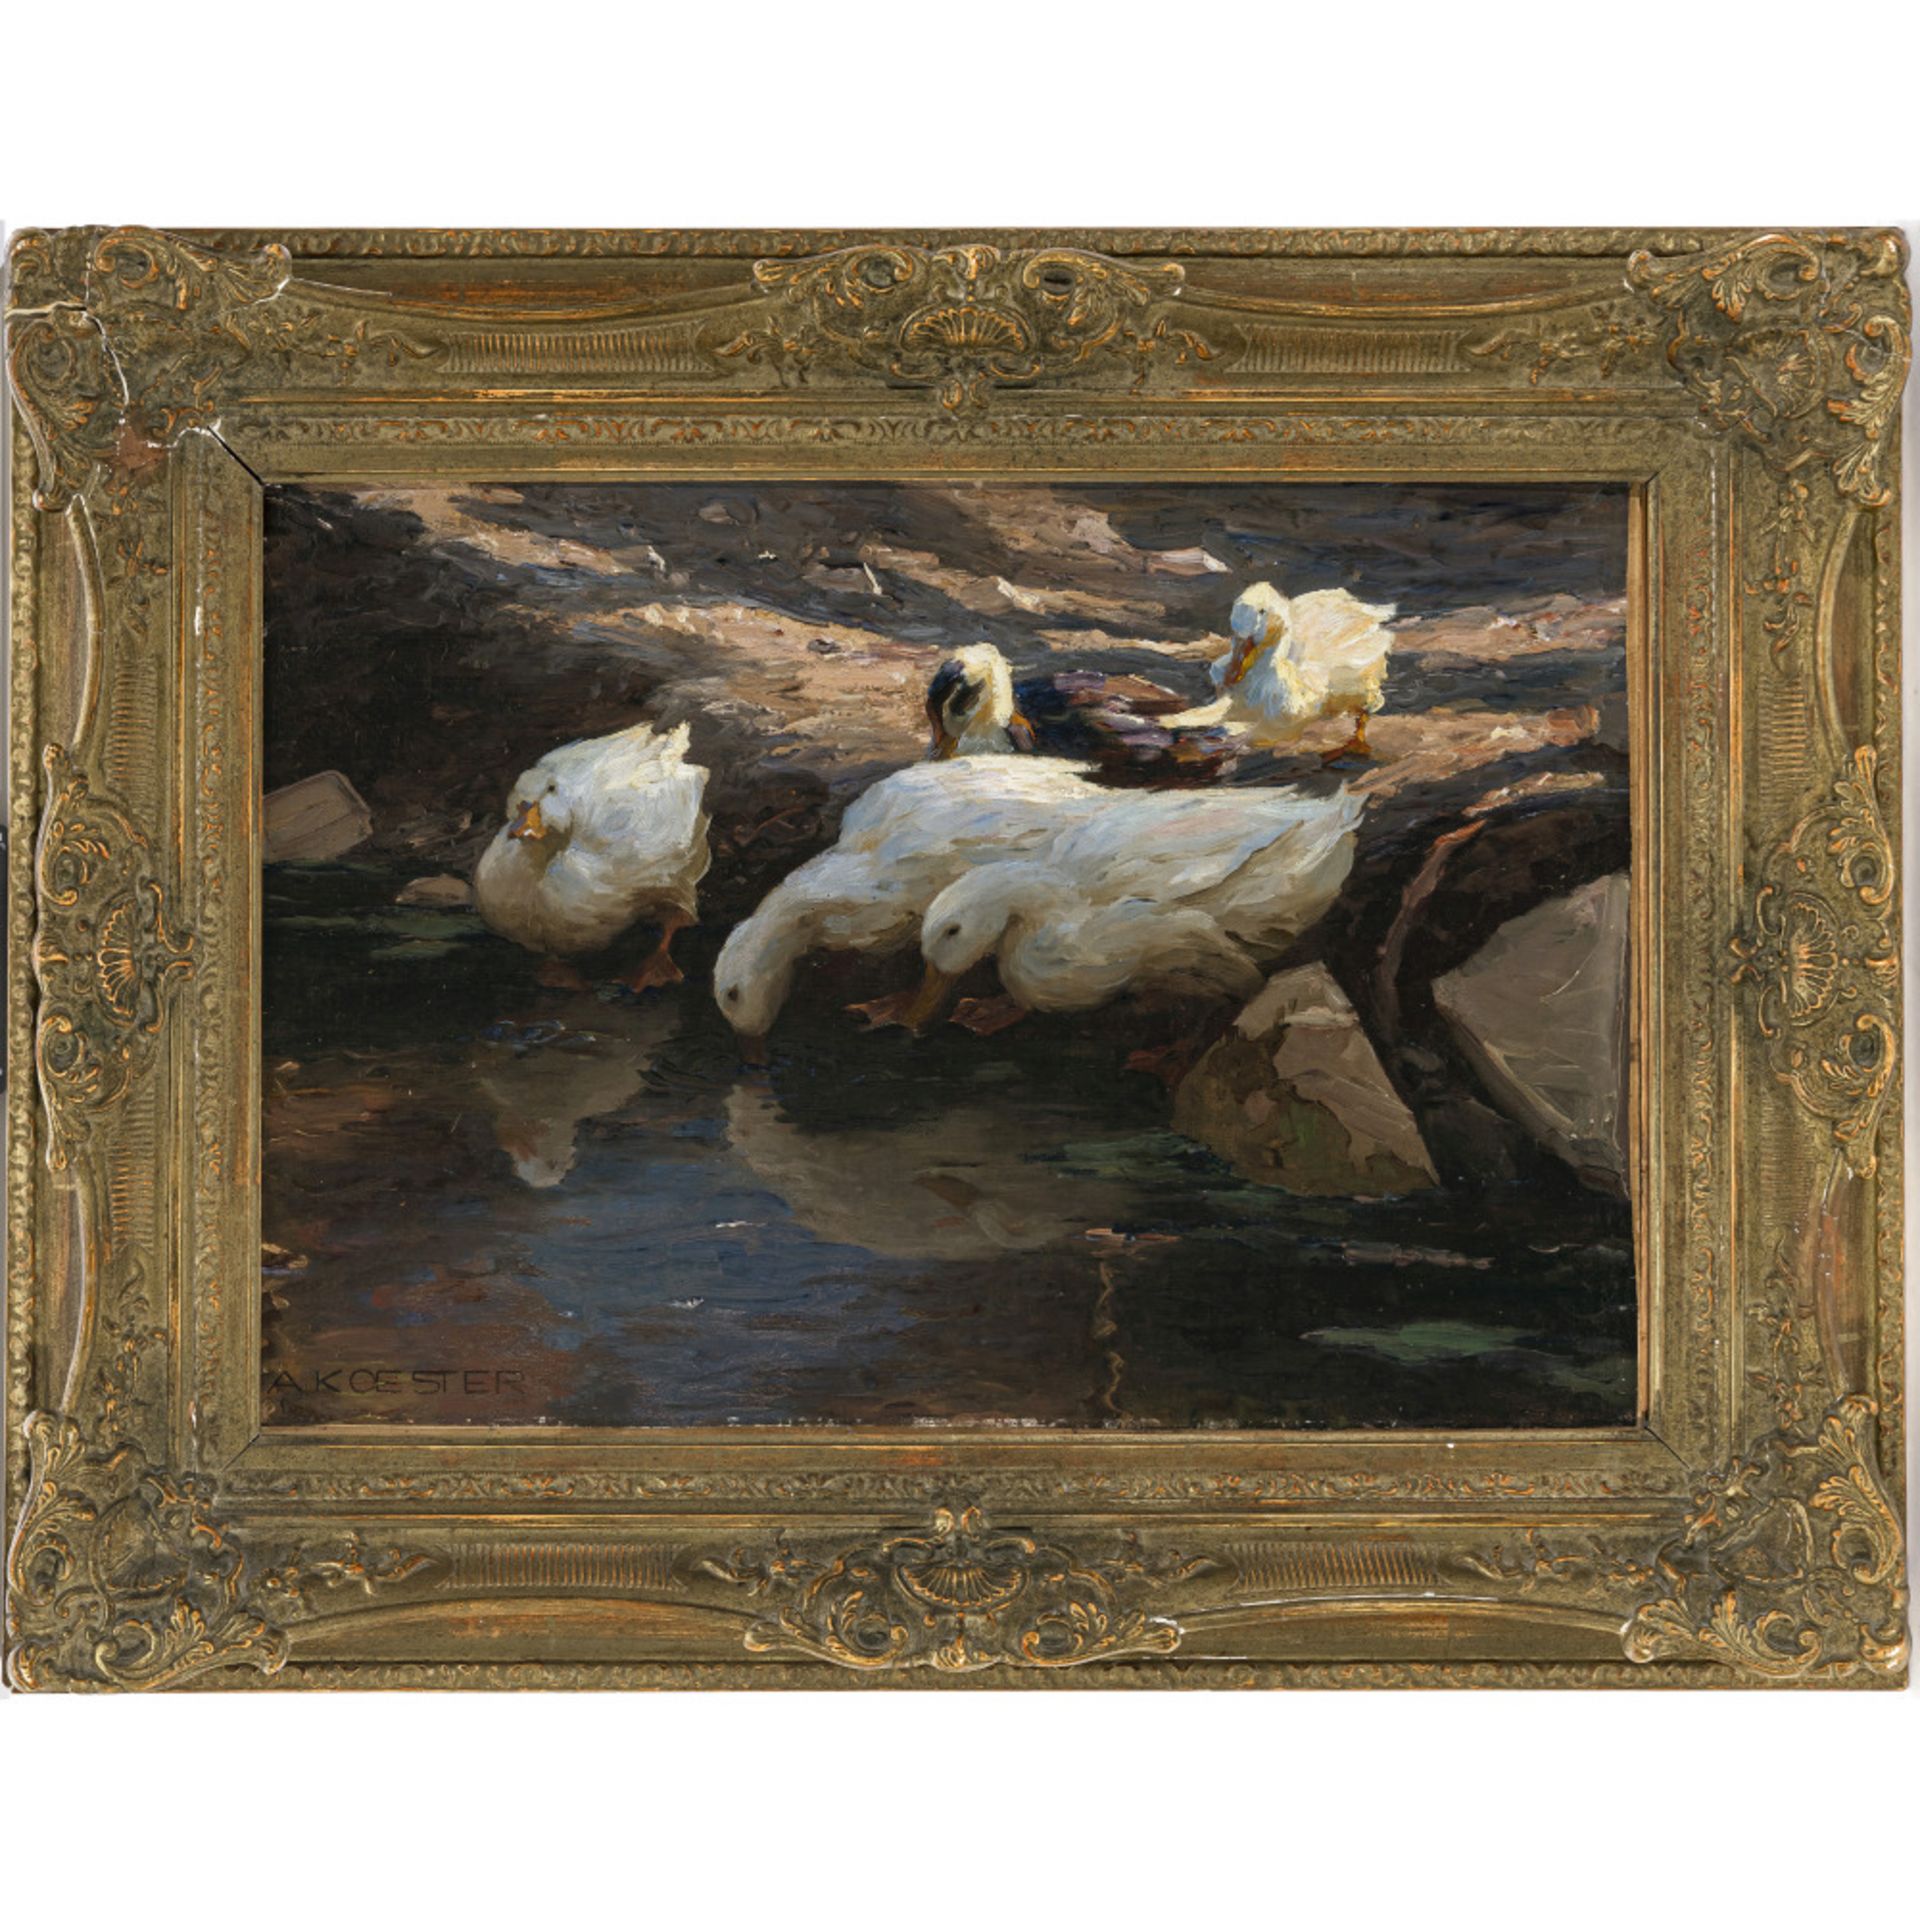 Alexander Koester - Five ducks on the bank - Image 2 of 2